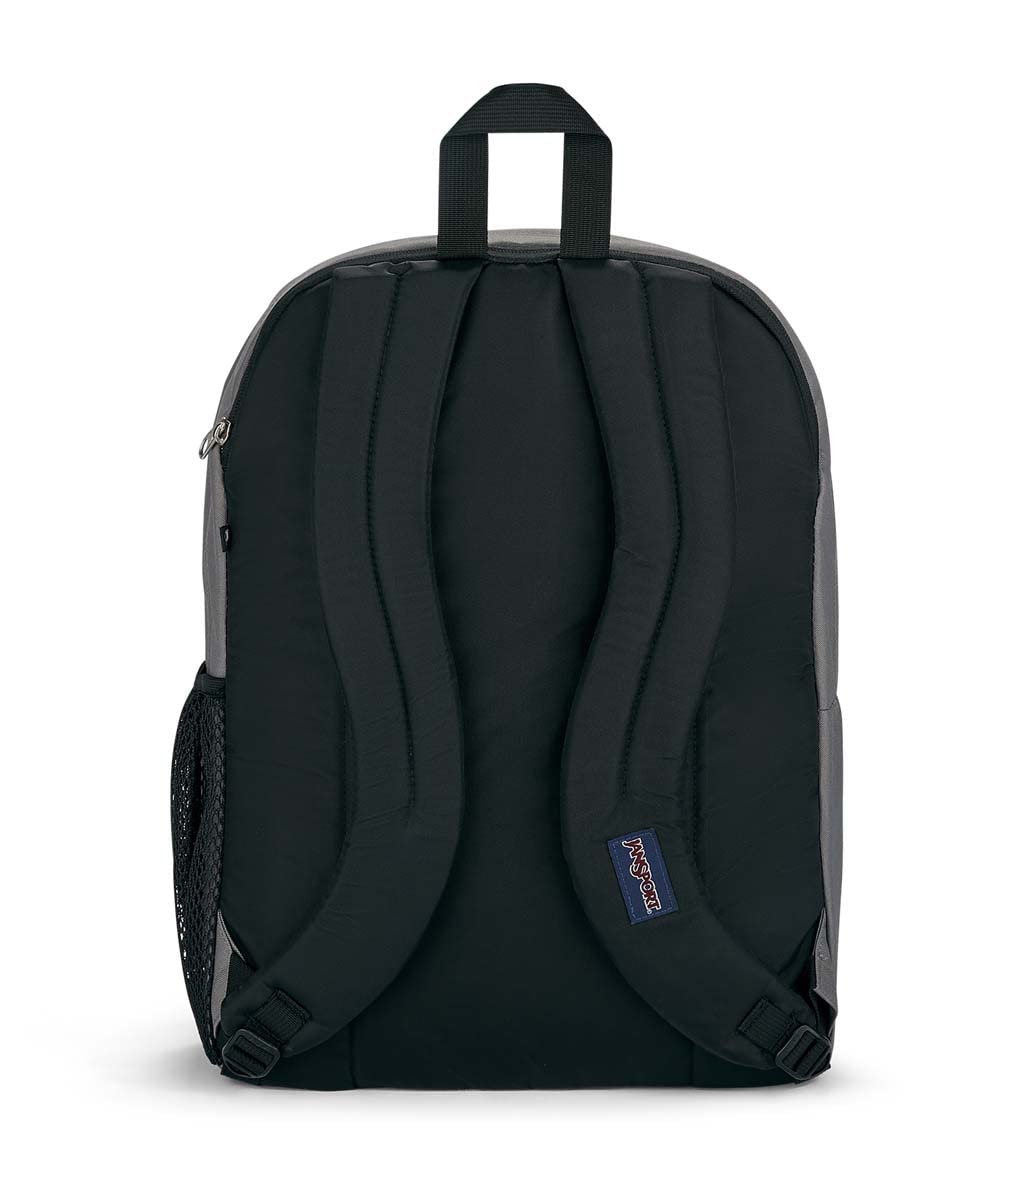 JanSport Laptop Backpack, Graphite Grey - Computer Bag with 2 Compartments, Ergonomic Shoulder Straps, 15” Laptop Sleeve, Haul Handle - Rucksack